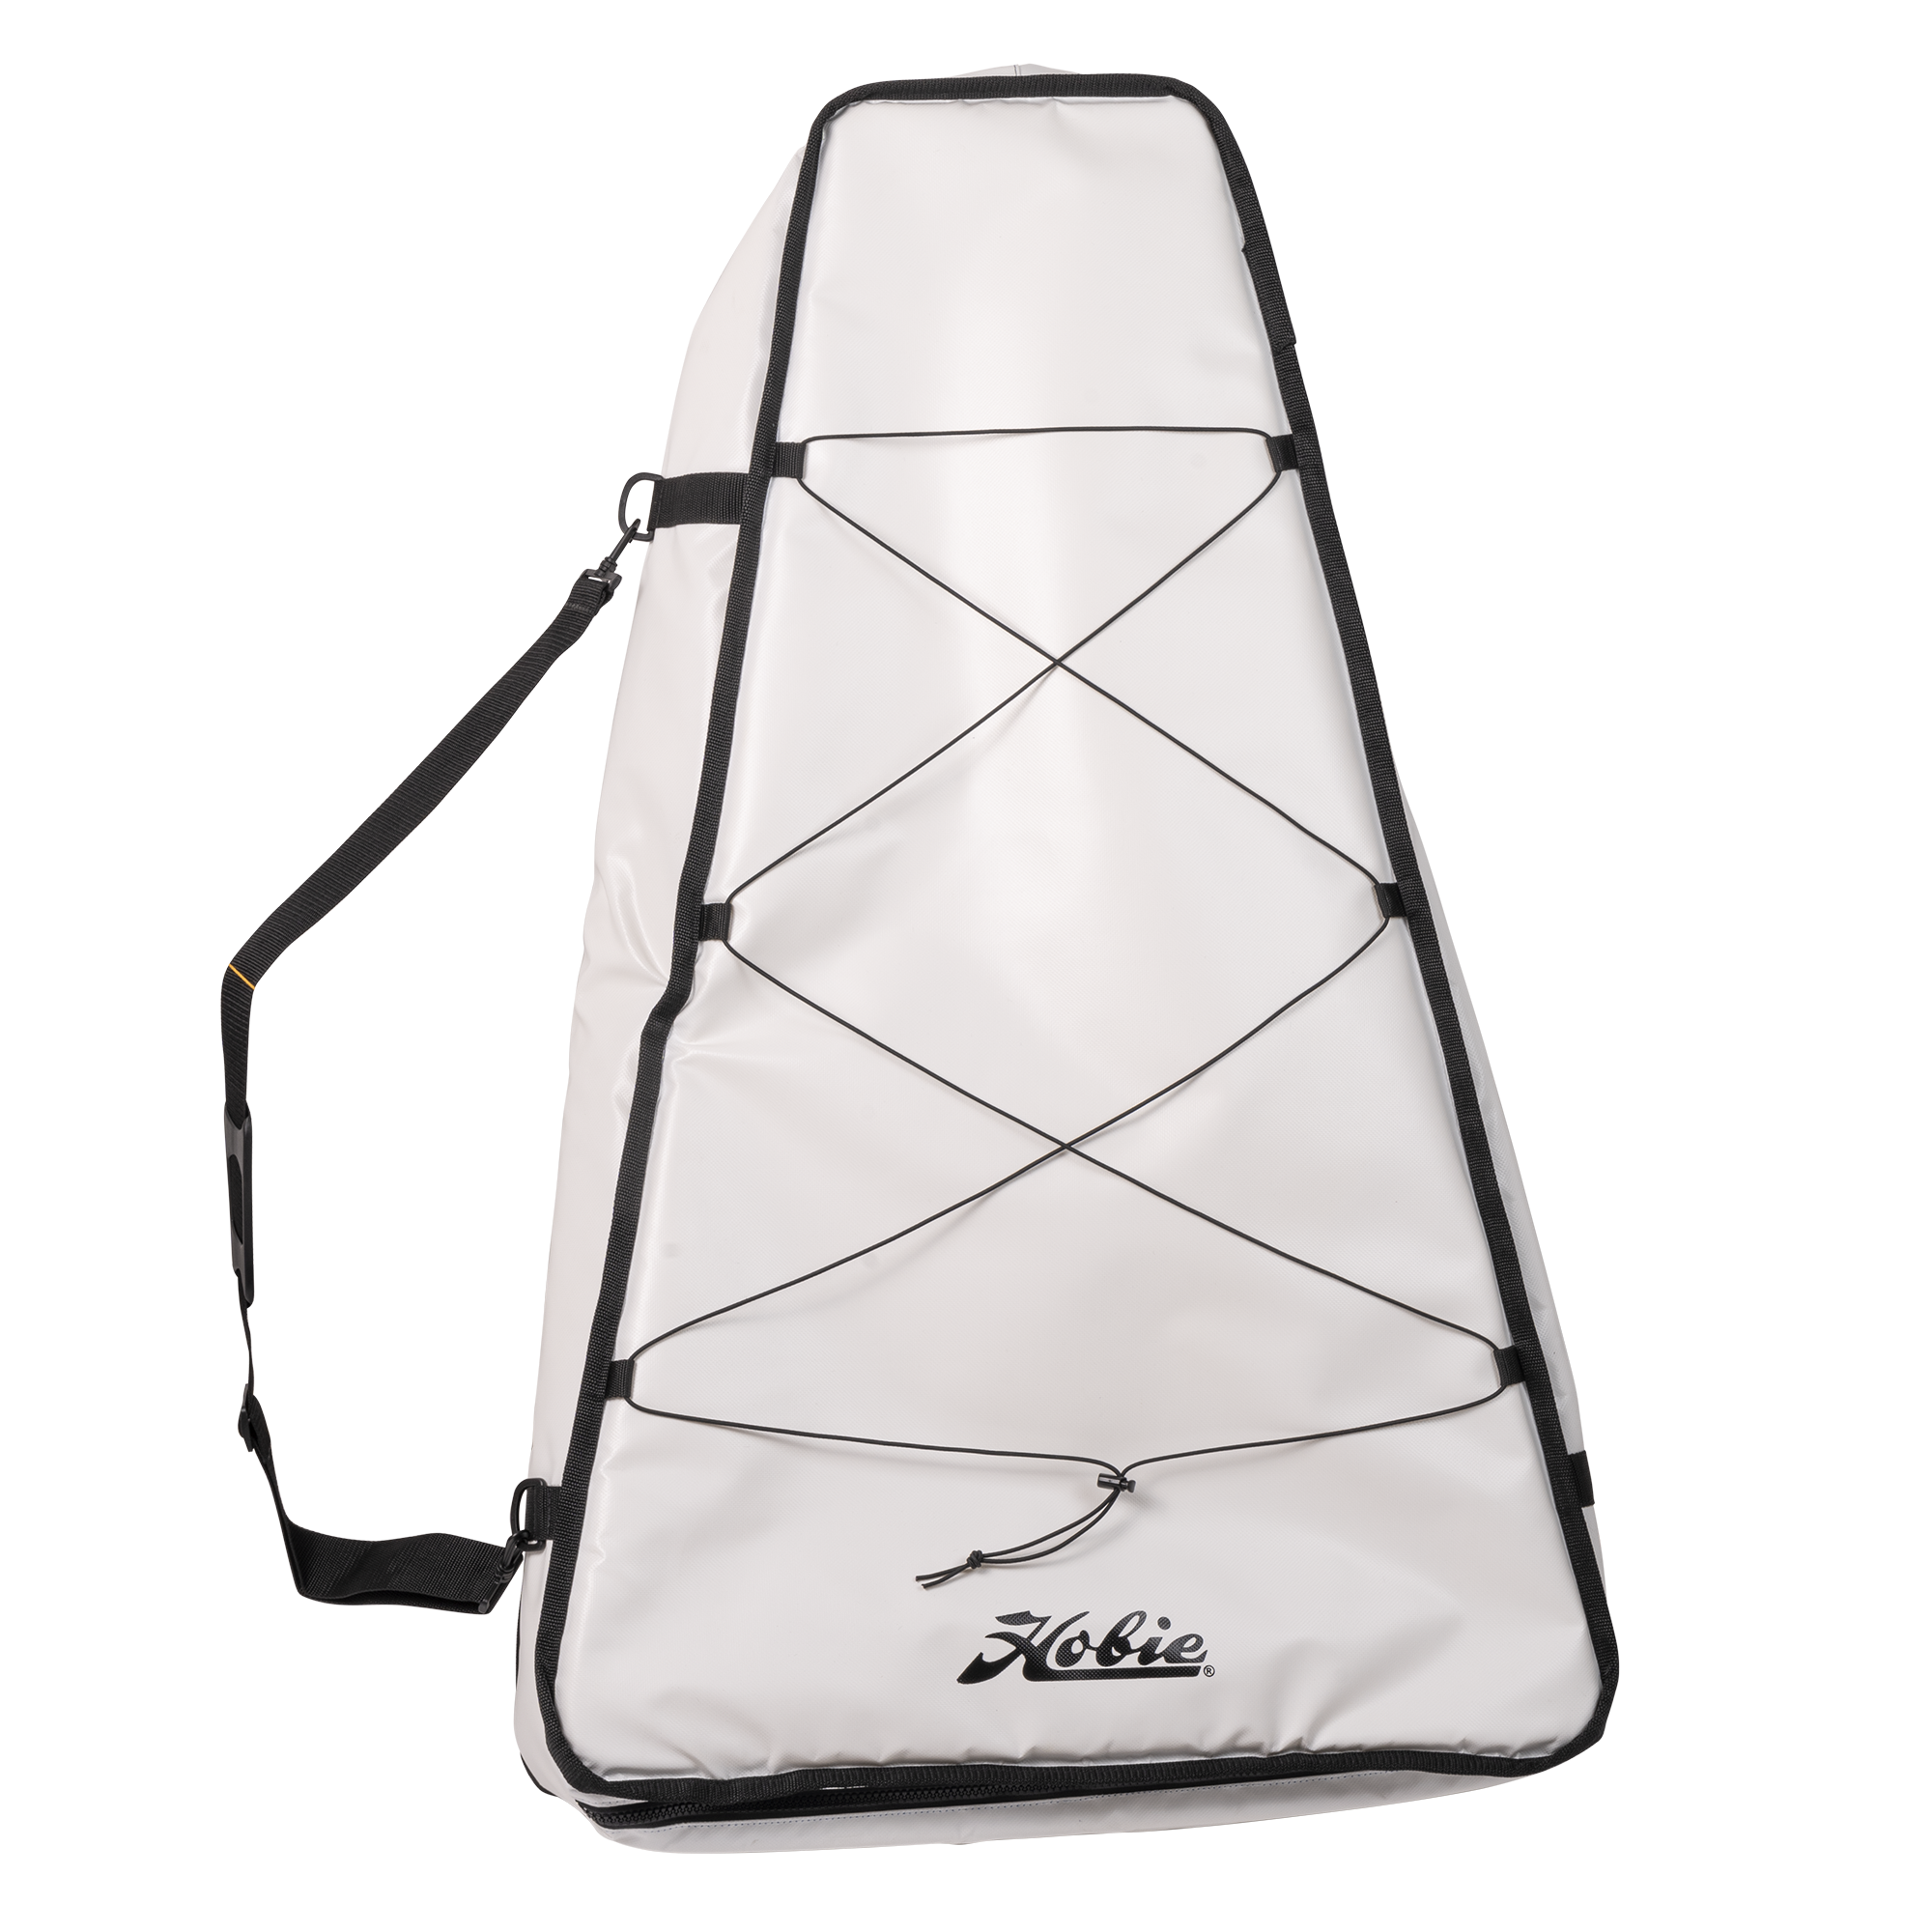 Hobie Kayak Soft Cooler Fish Bag, Extra Large – Totally Immersed